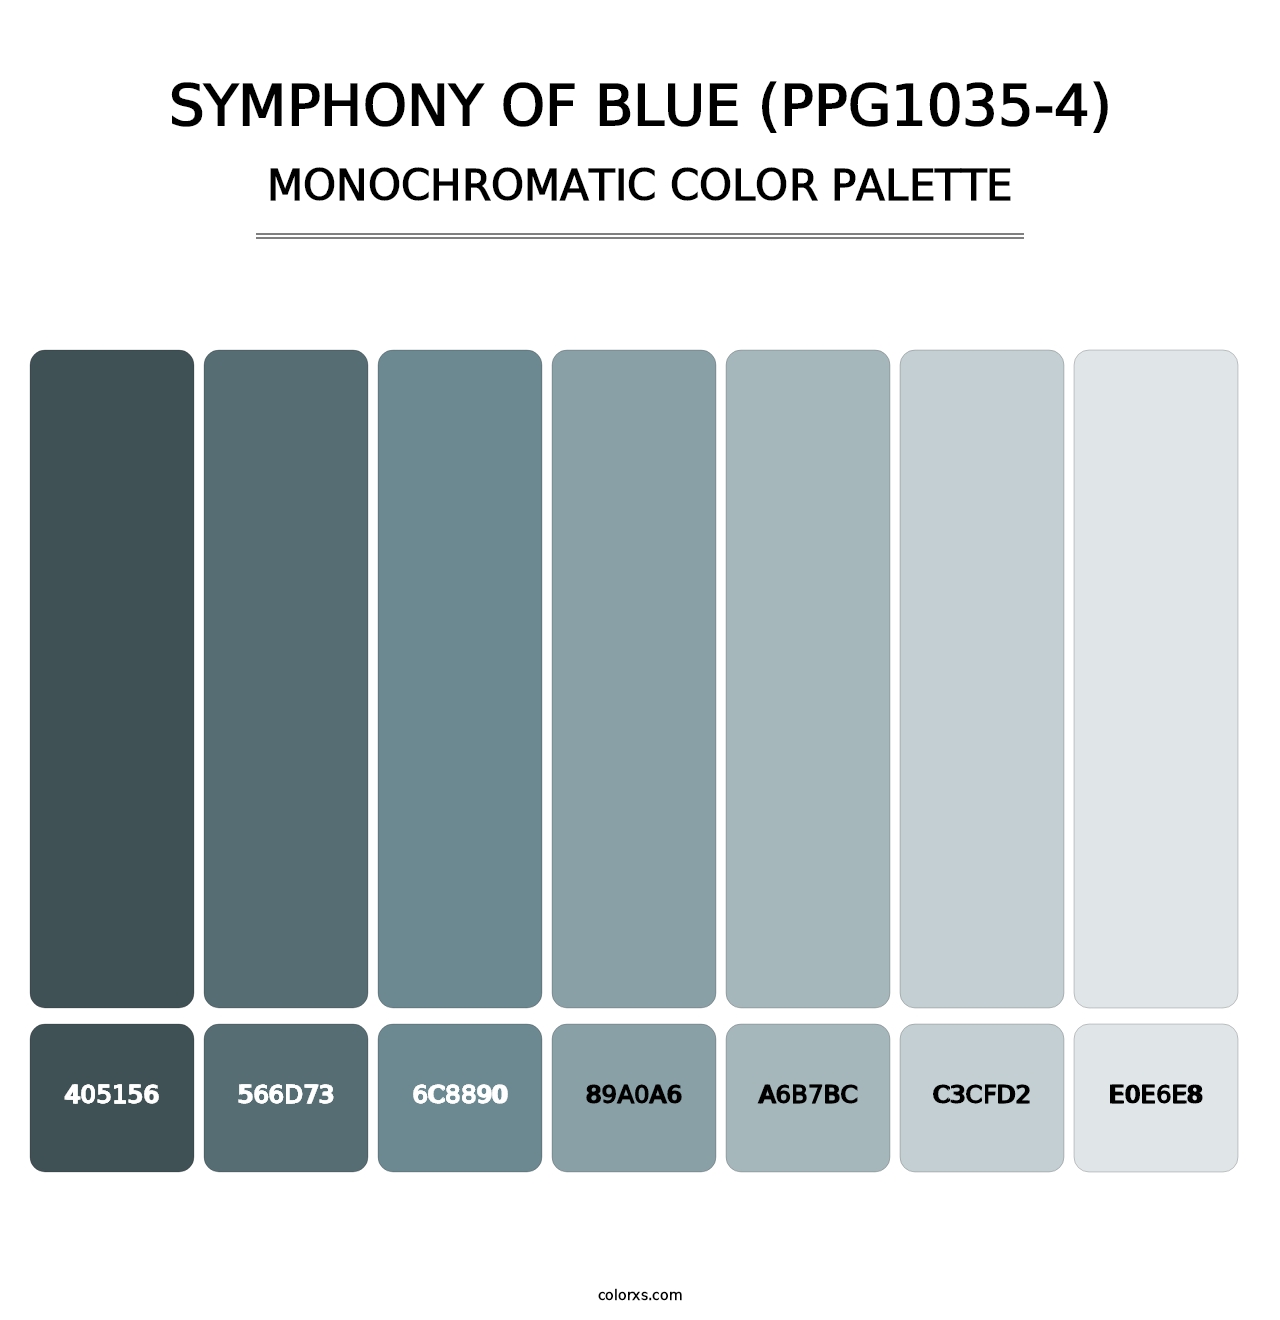 Symphony Of Blue (PPG1035-4) - Monochromatic Color Palette